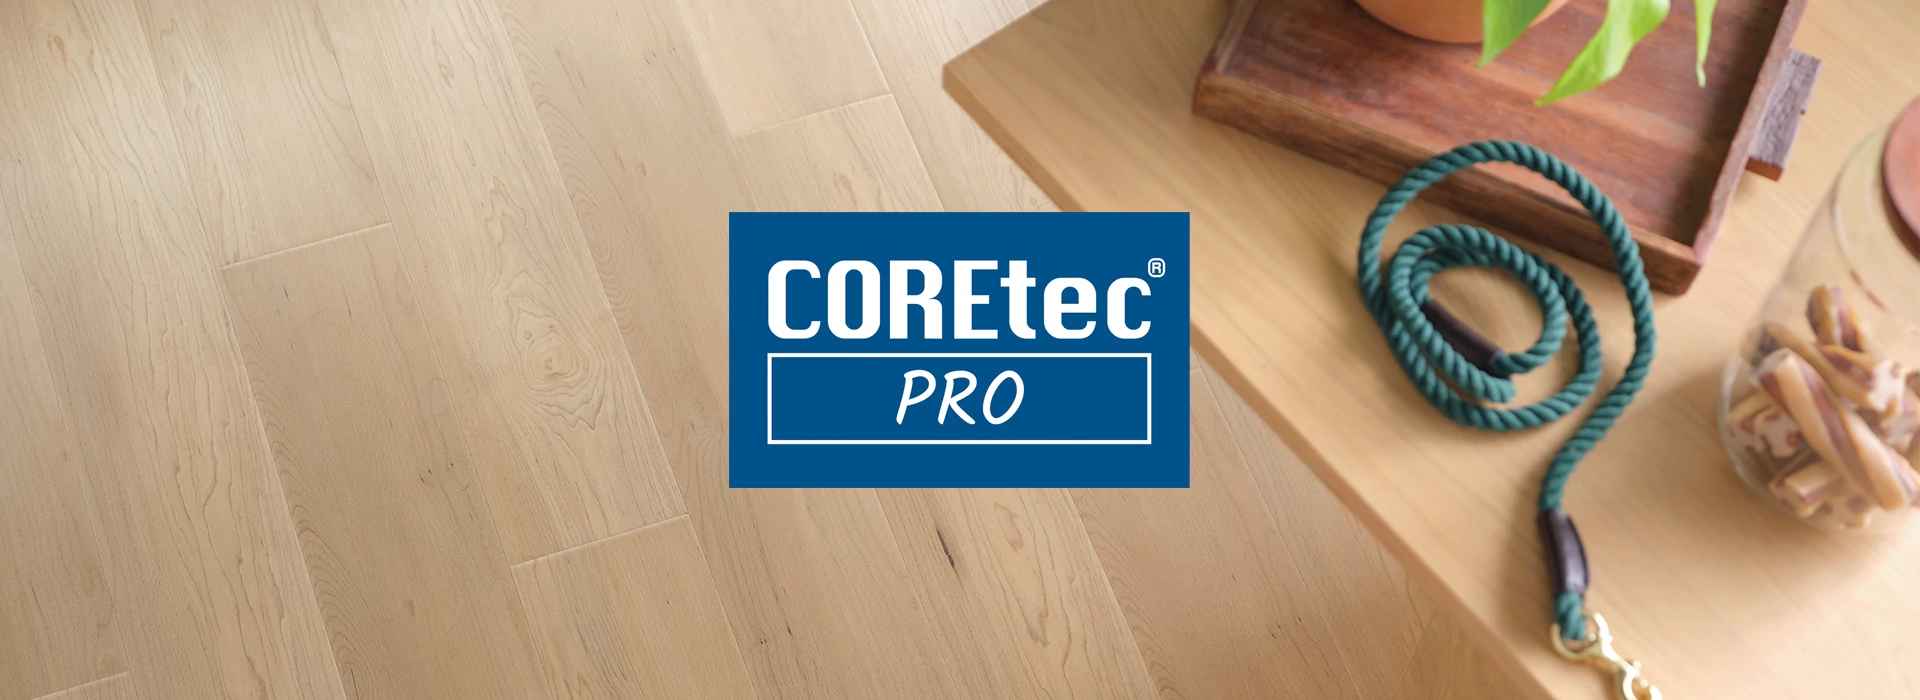 COREtec Pro product light wood